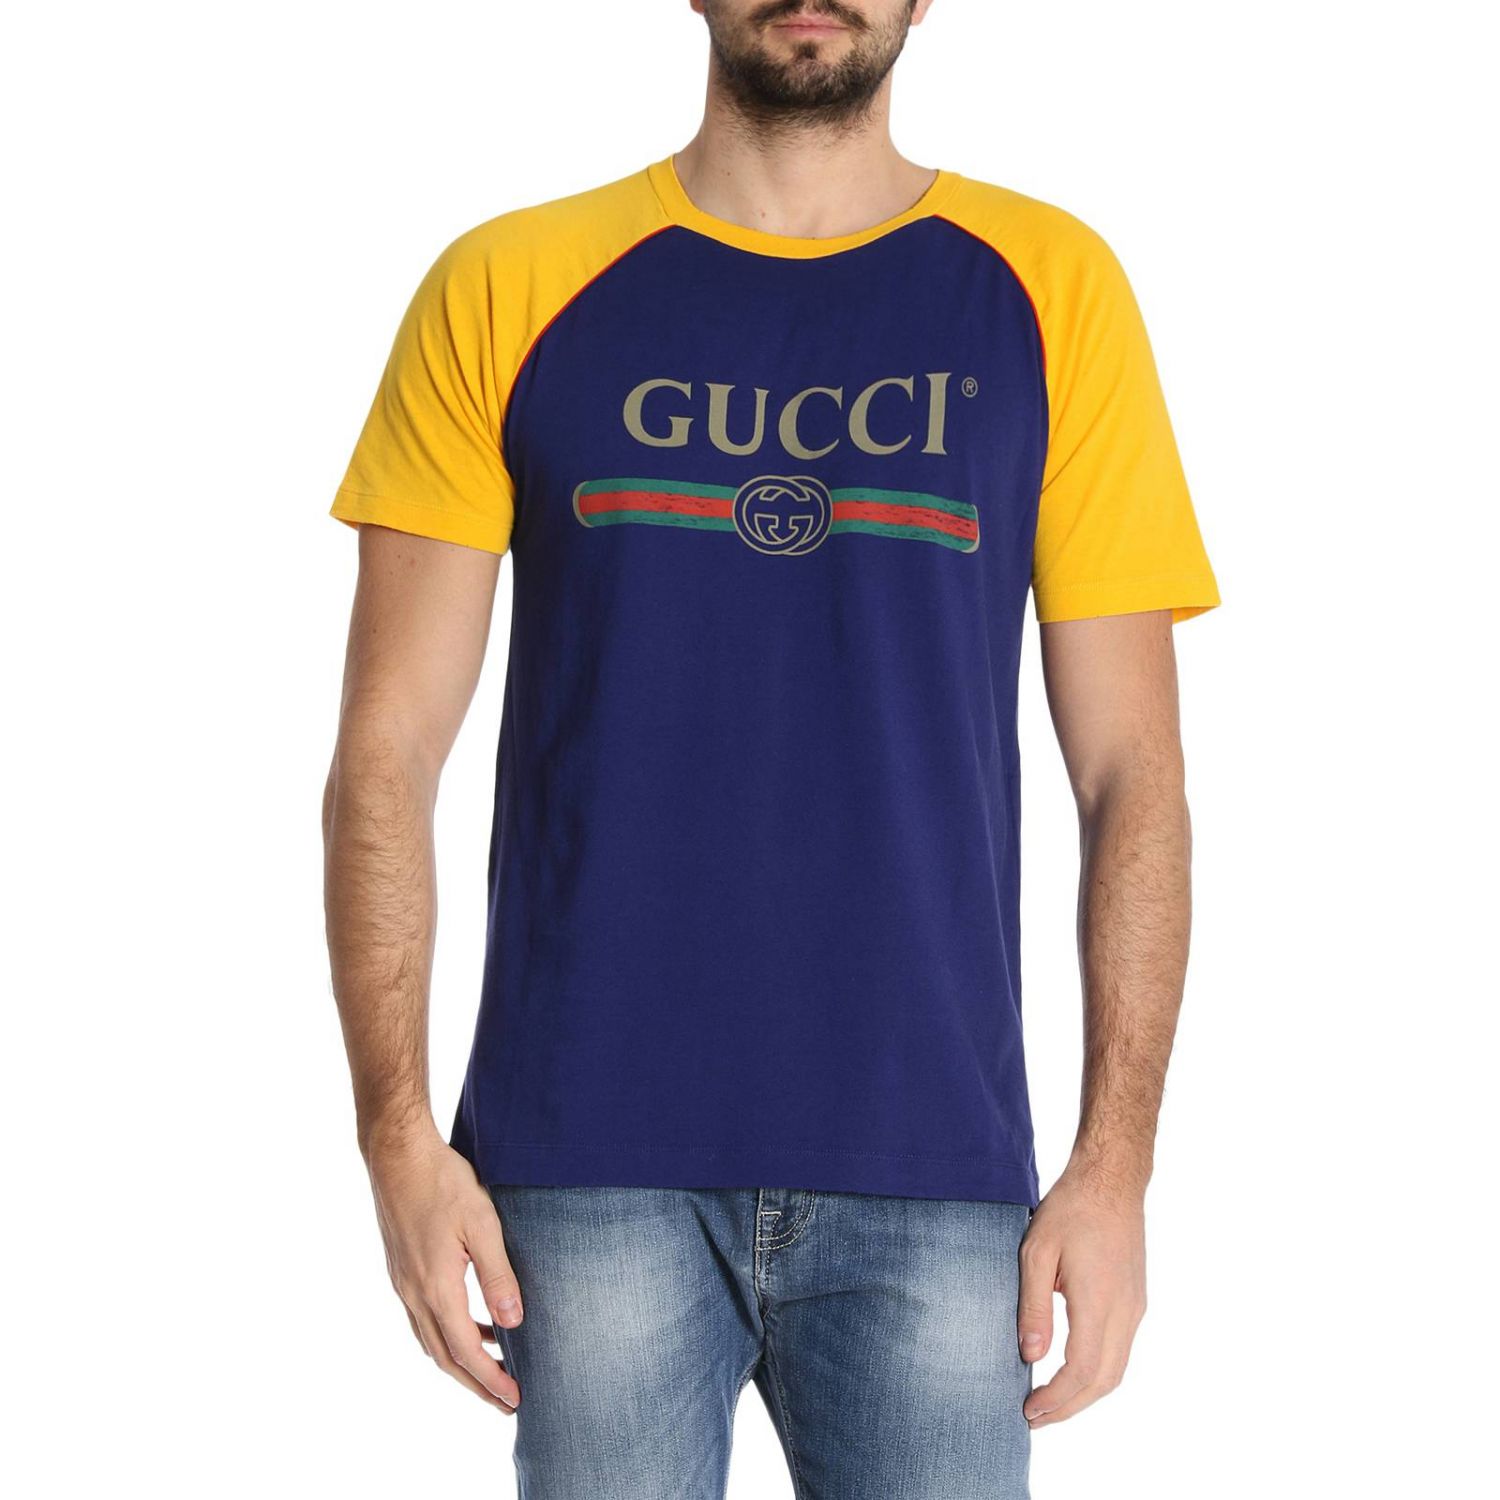 gucci t shirt for men